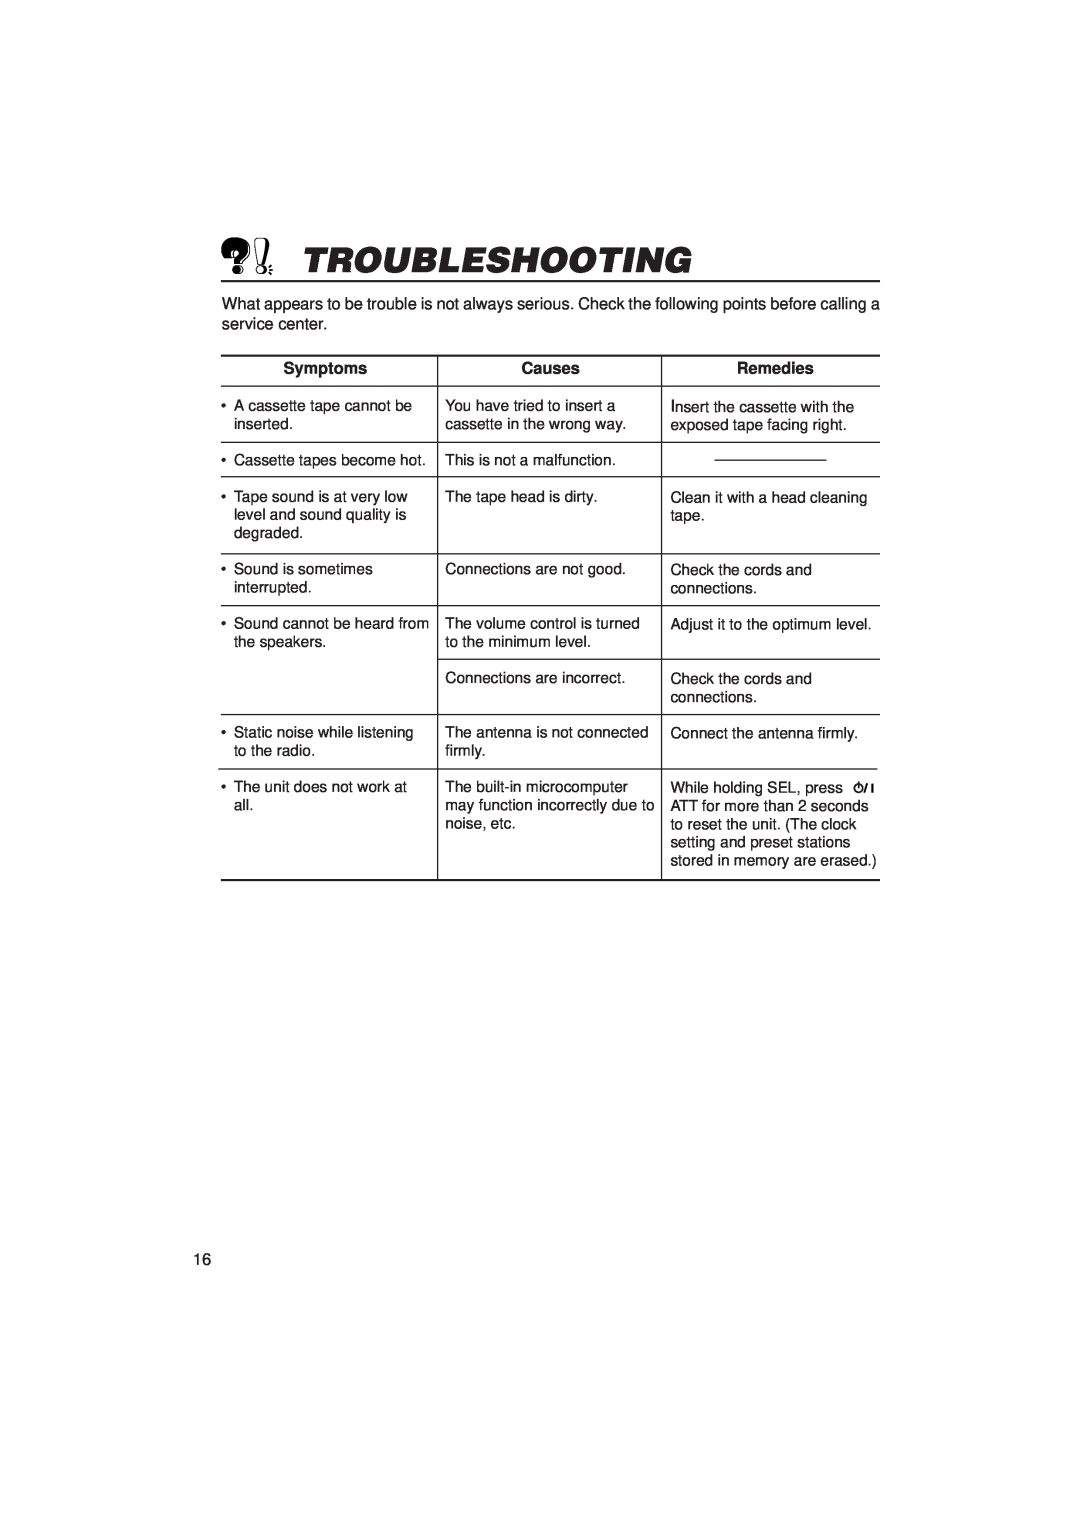 JVC KS F100 manual Troubleshooting, Symptoms, Causes, Remedies 